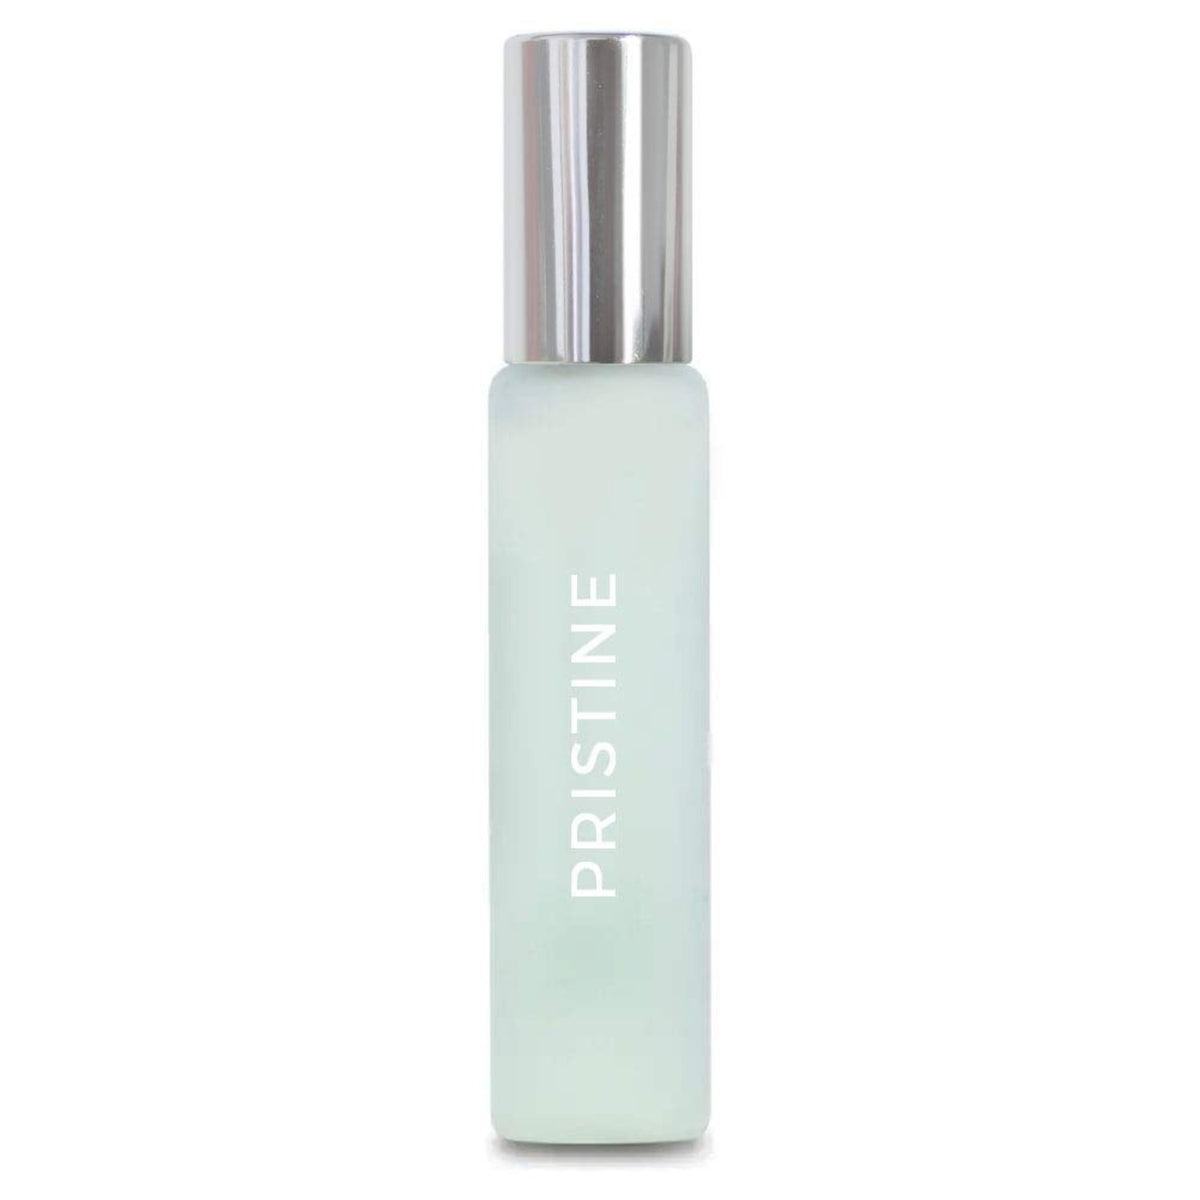 Skinn By Titan Pristine Eau De Perfume For Women Edp Perfume Spray 20ml,50ml & 100ml